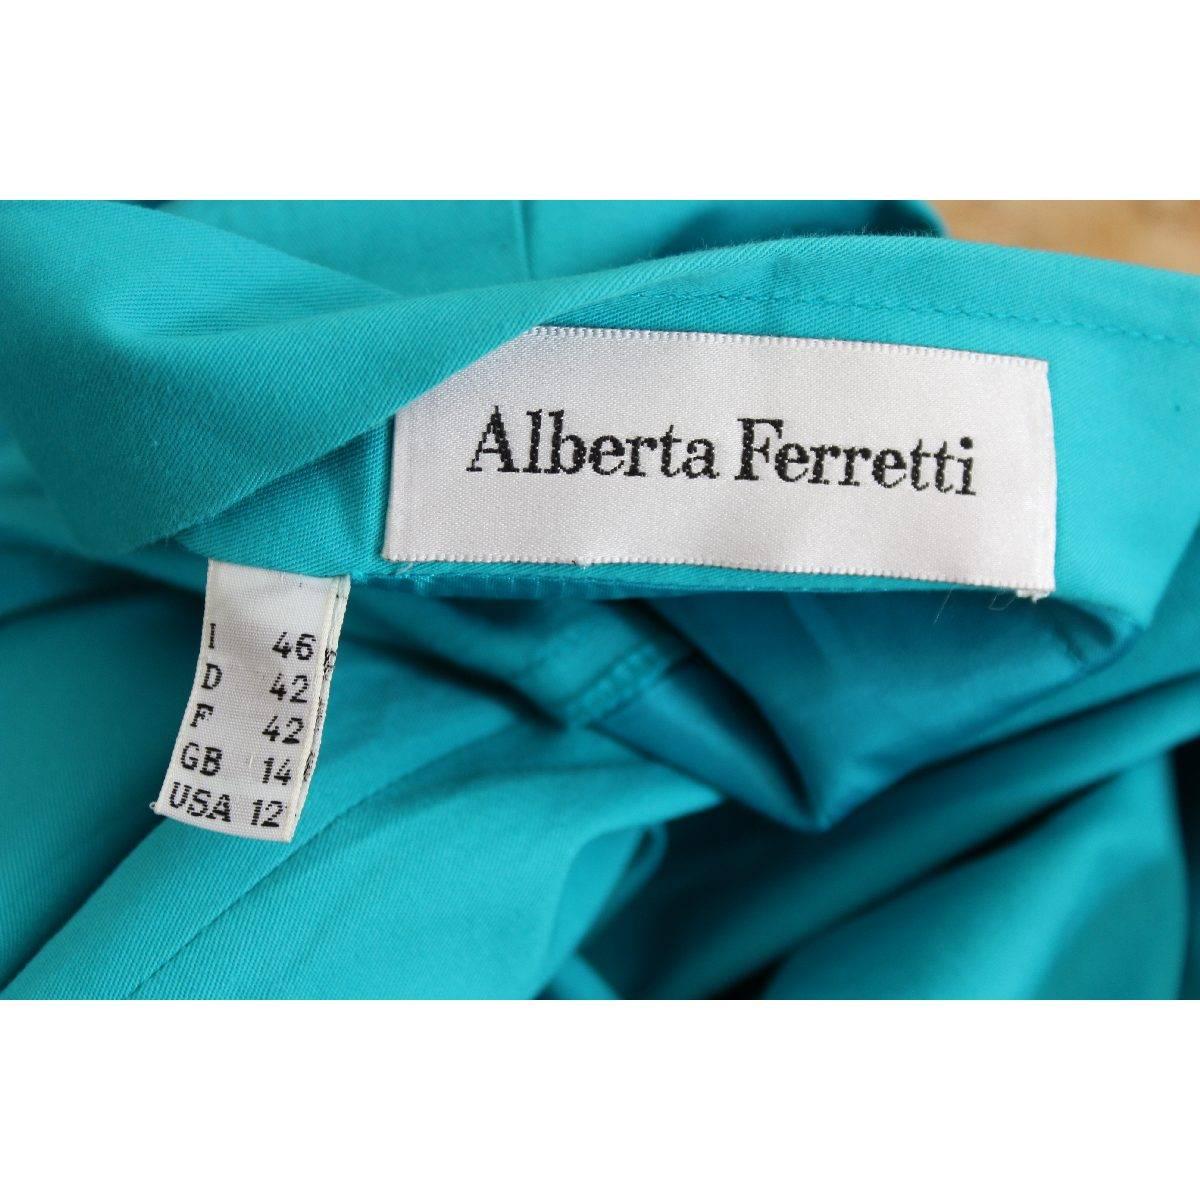 Women's Alberta Ferretti vintage cotton light blue skirt size 46 it made italy